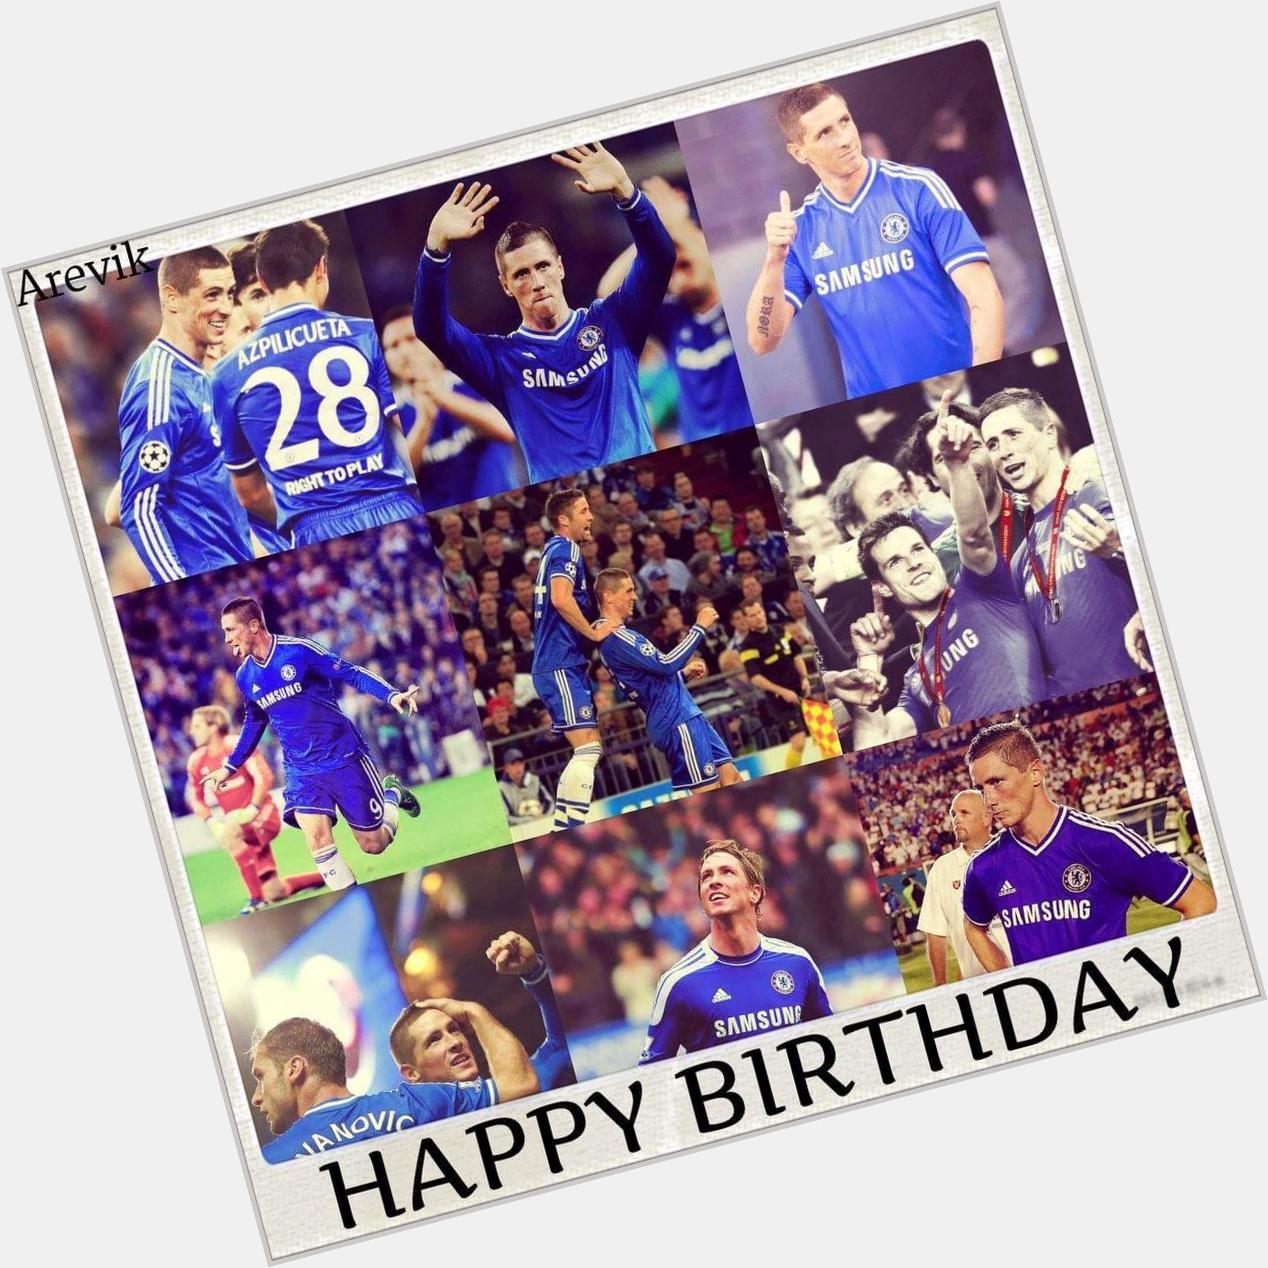 A very Happy Birthday to former Blue Fernando Torres! 